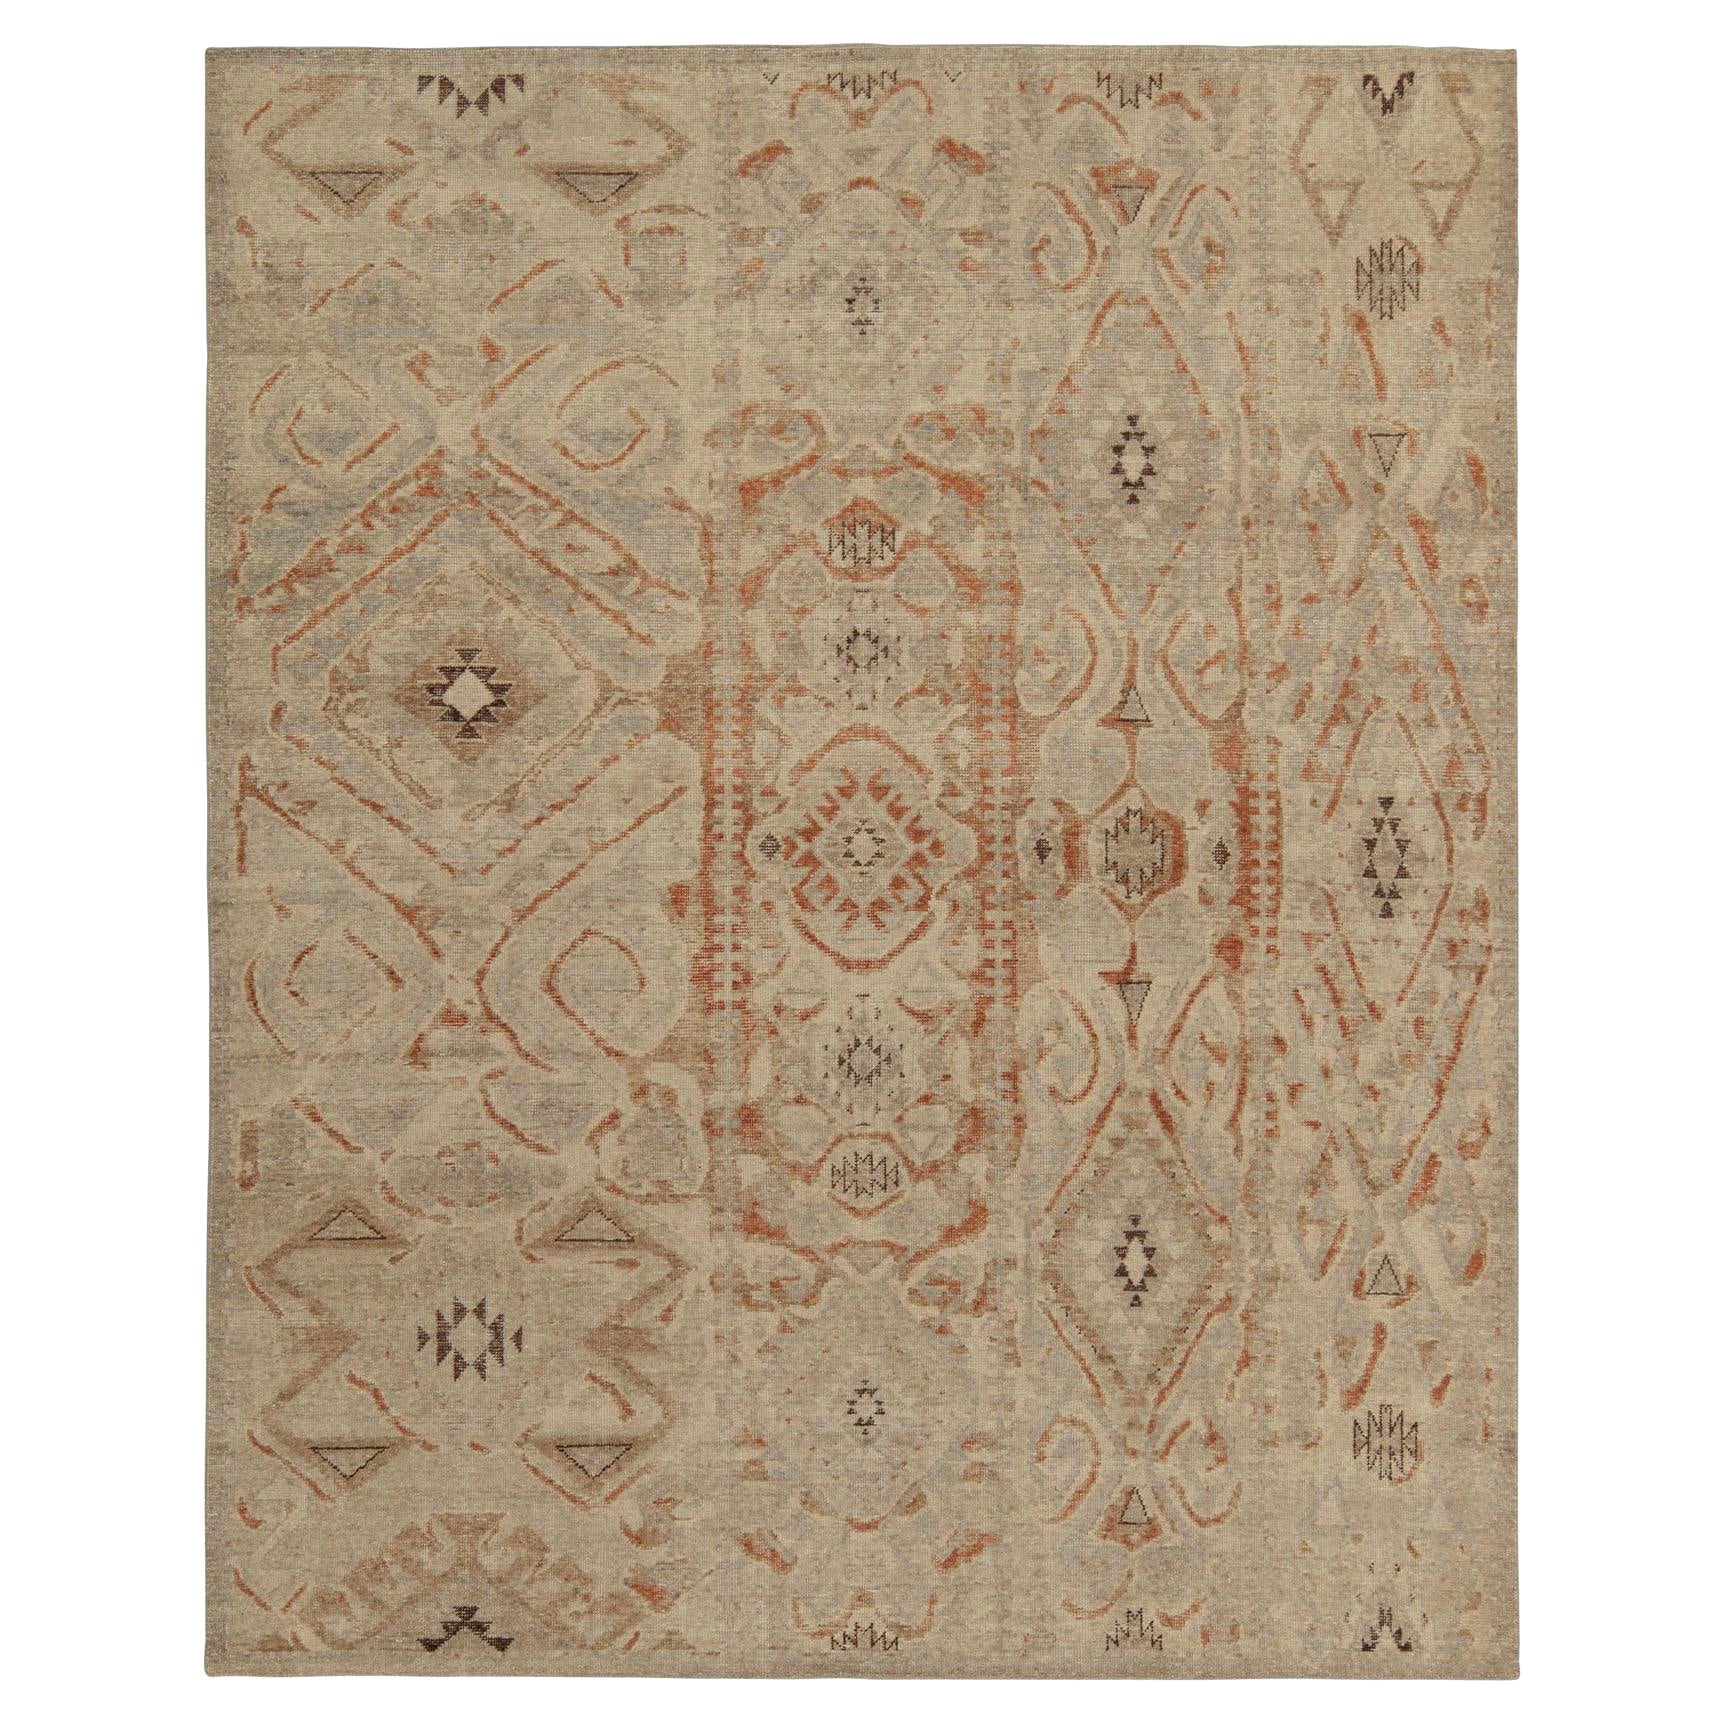 Rug & Kilim's Distressed Style Teppich in Beige-Braun, Blau & Rost Tribal-Mustern im Angebot